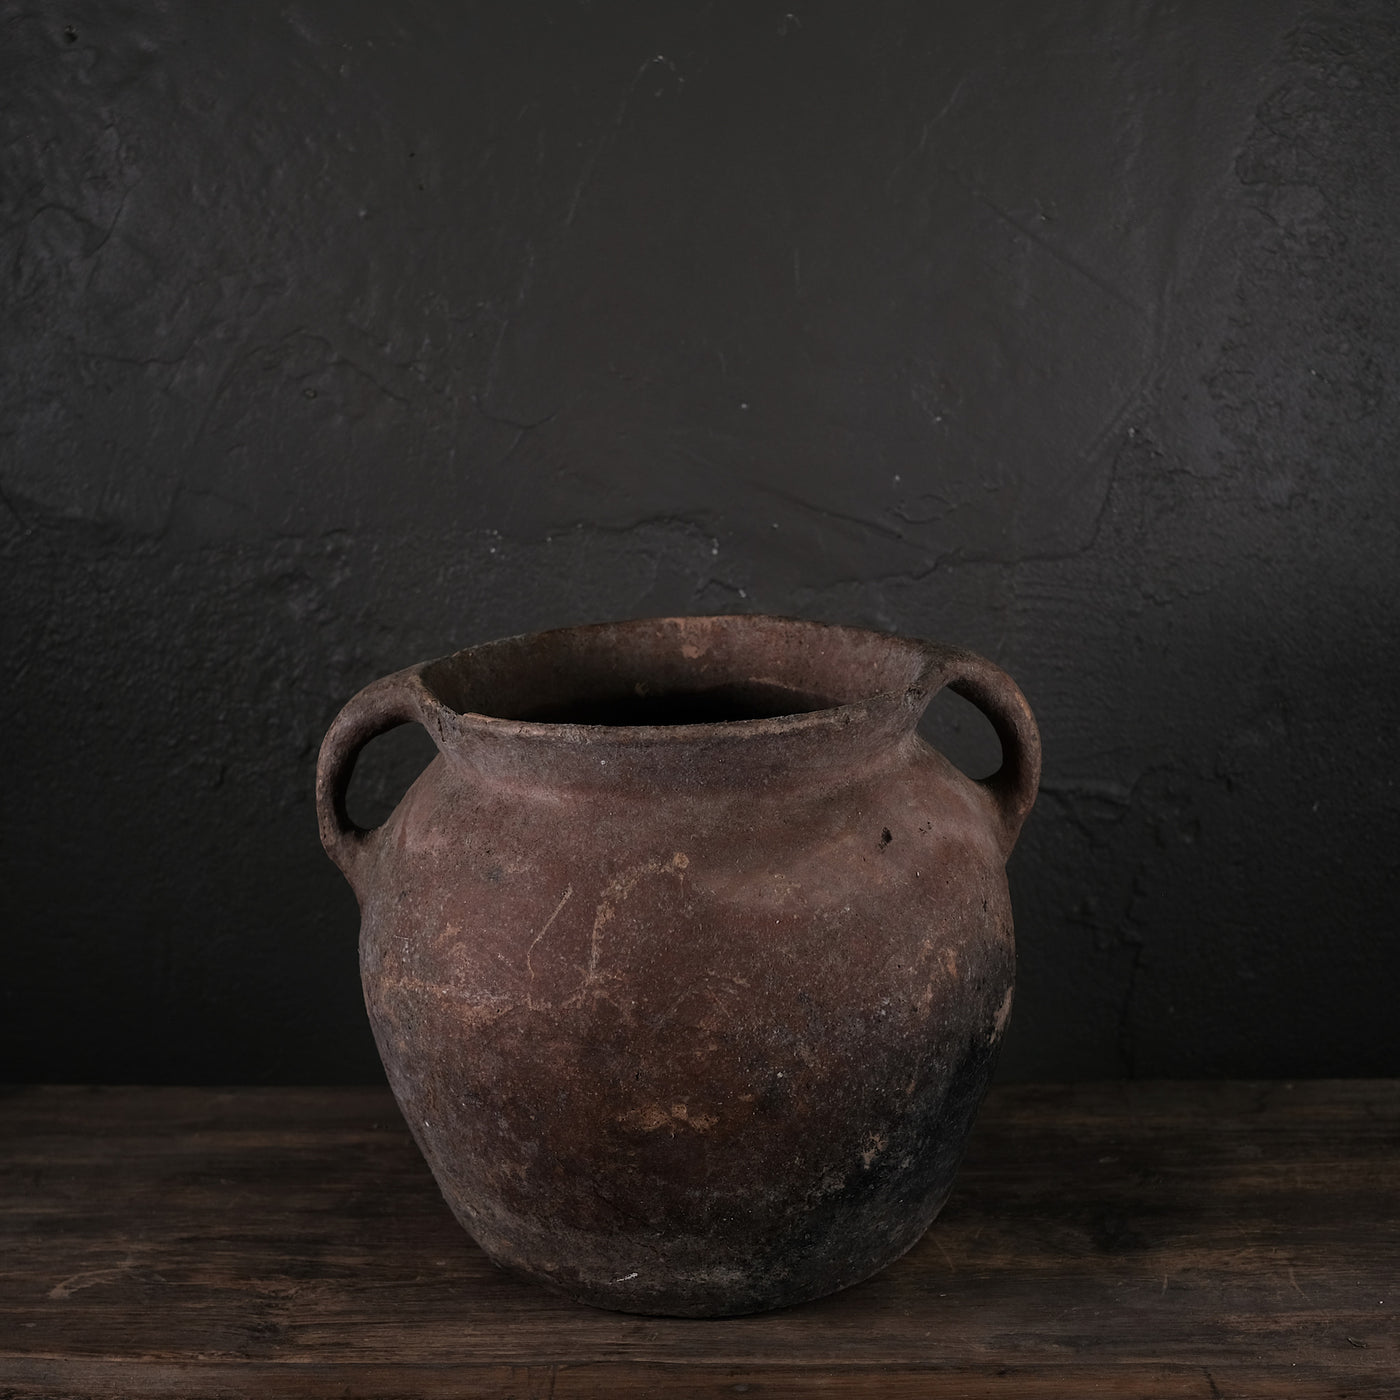 Kilis - Ancient Turkish Pottery